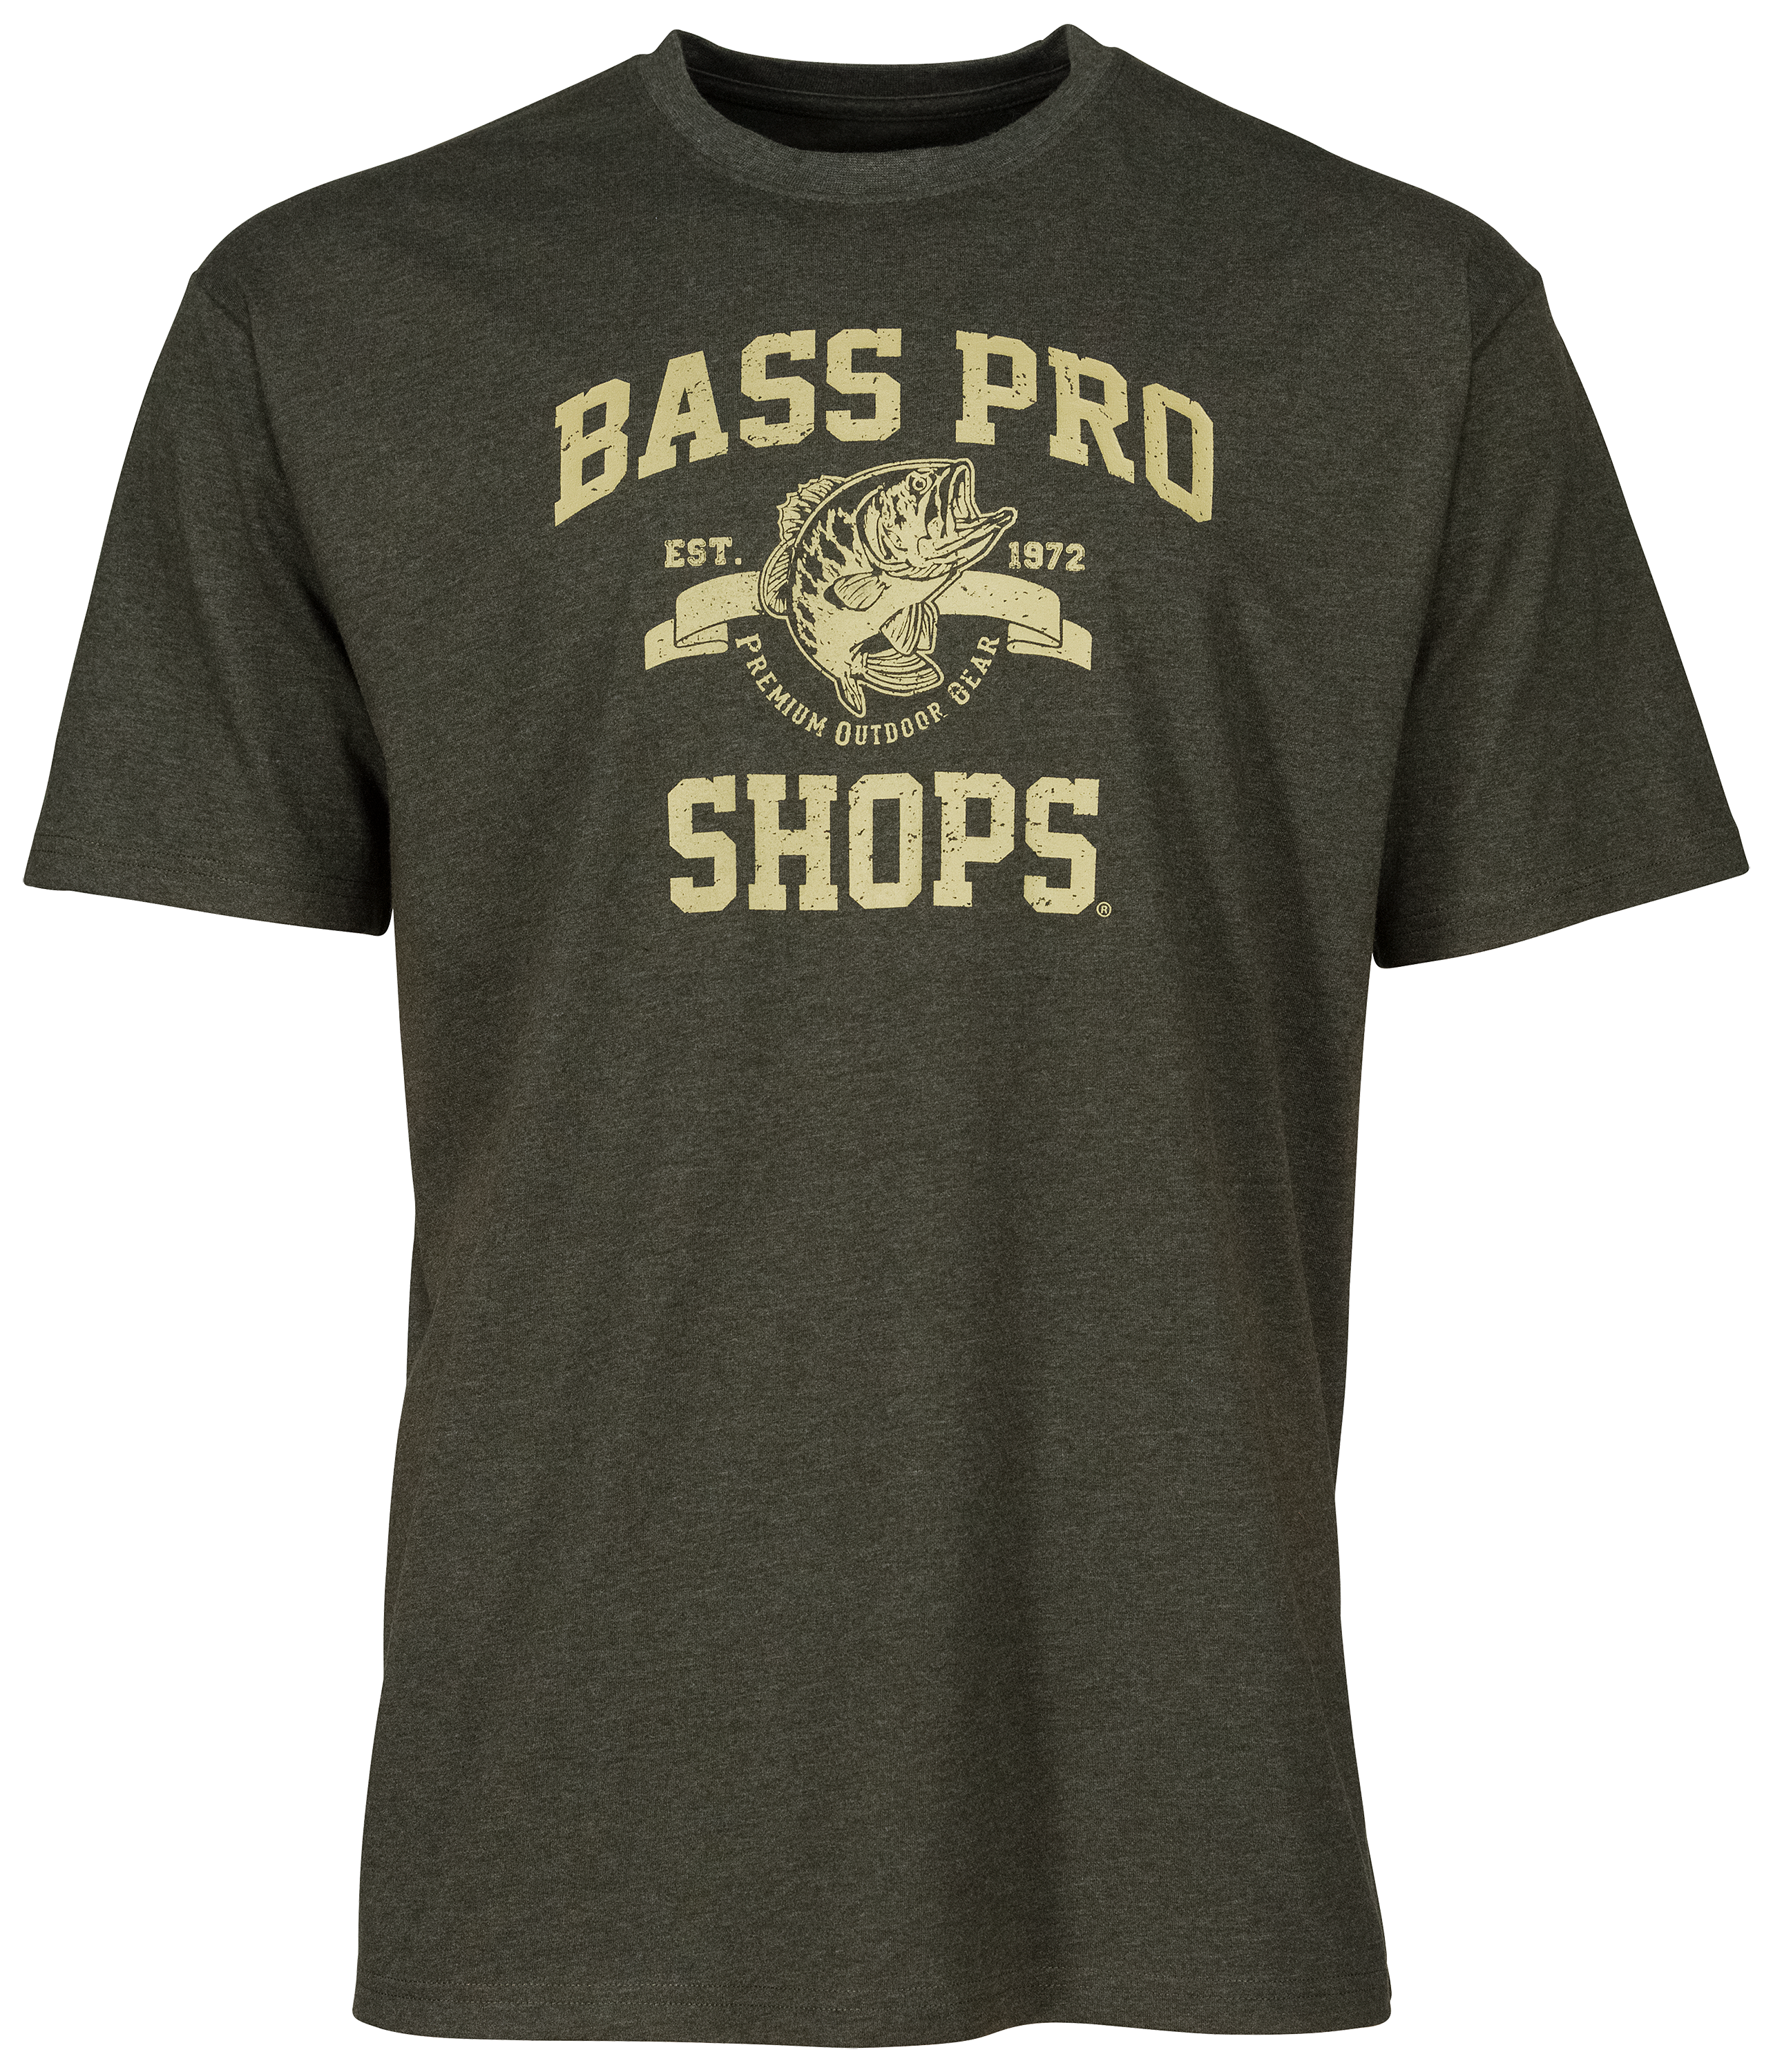 Bass Pro Shops Classic Logo Short-Sleeve T-Shirt for Men - Heather Rust - M